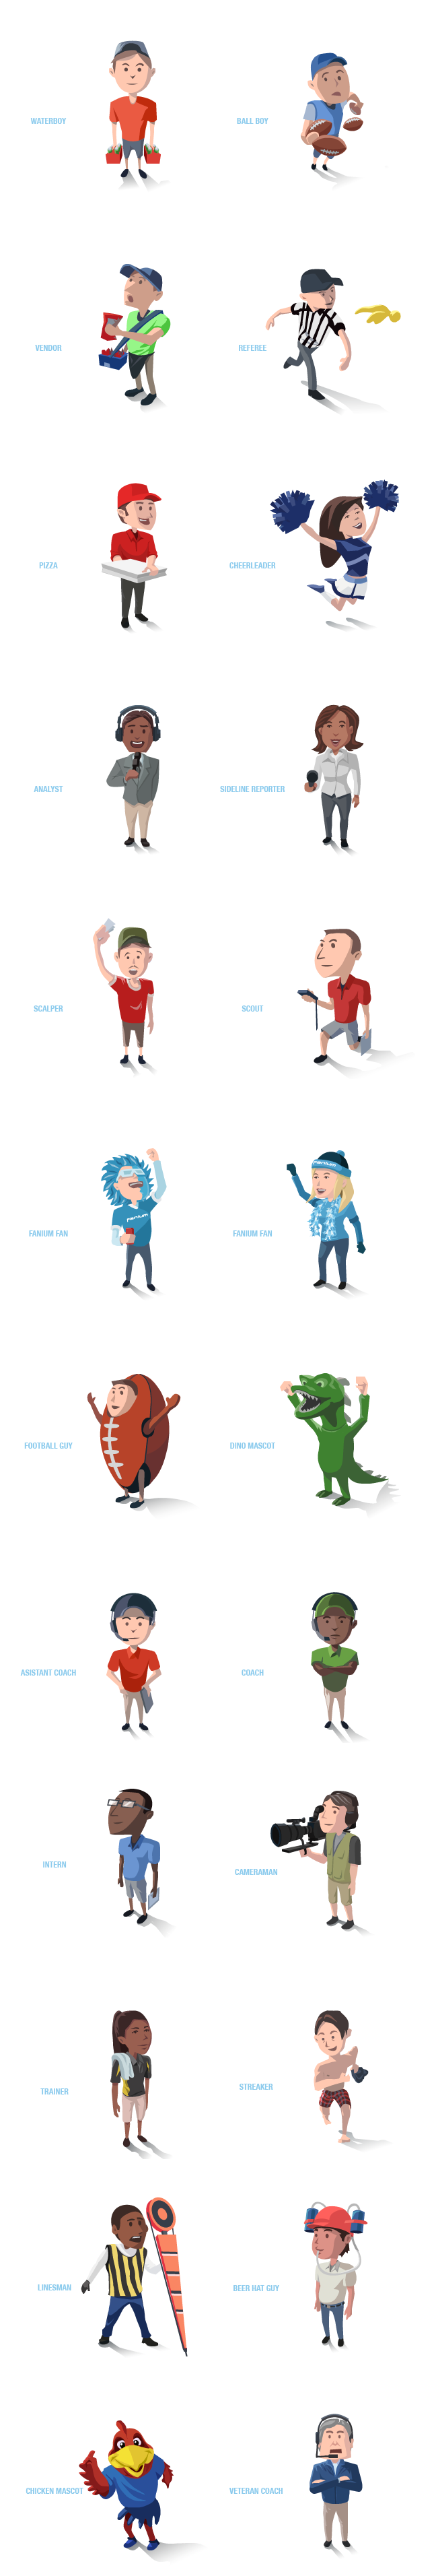 characters avatars cartoon sports people Illustrator vector graphics